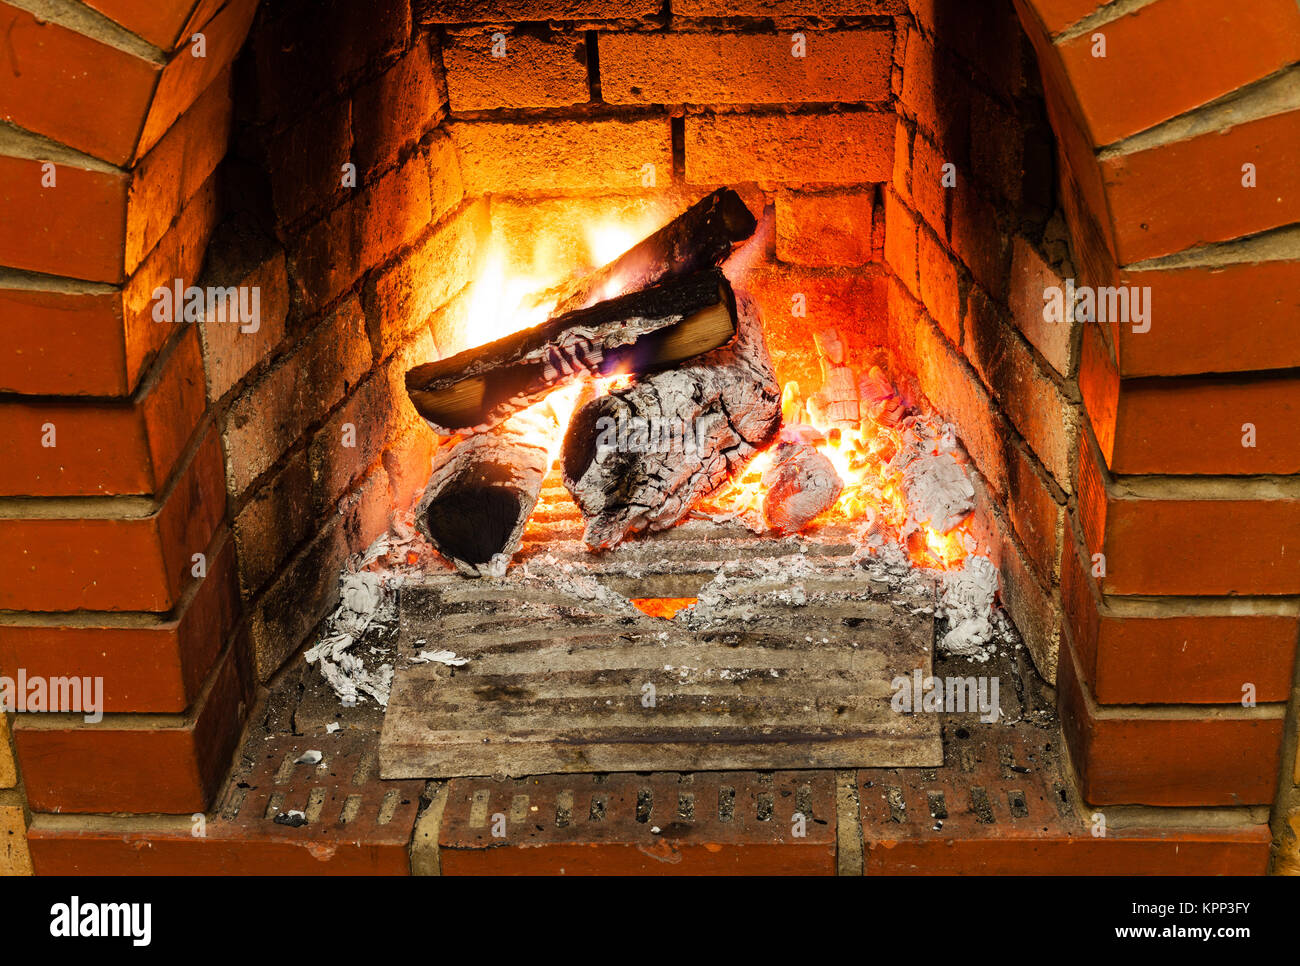 Asche, Kohle und Brennholz Kamin brennen Stockfoto